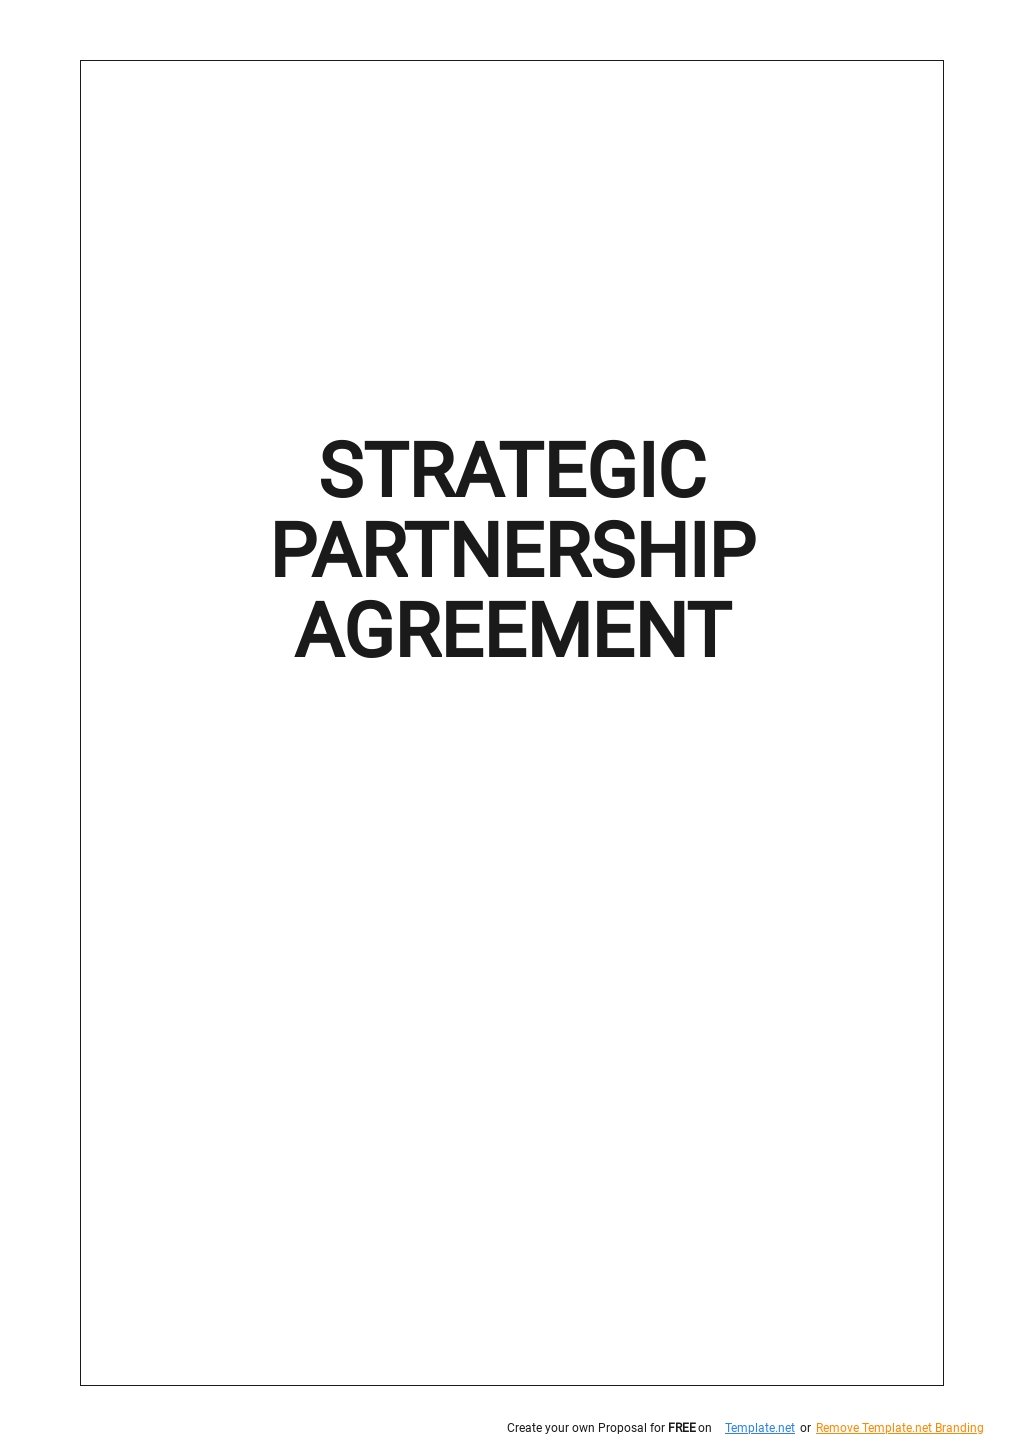 Strategic Business Partnership Agreement Template.jpe